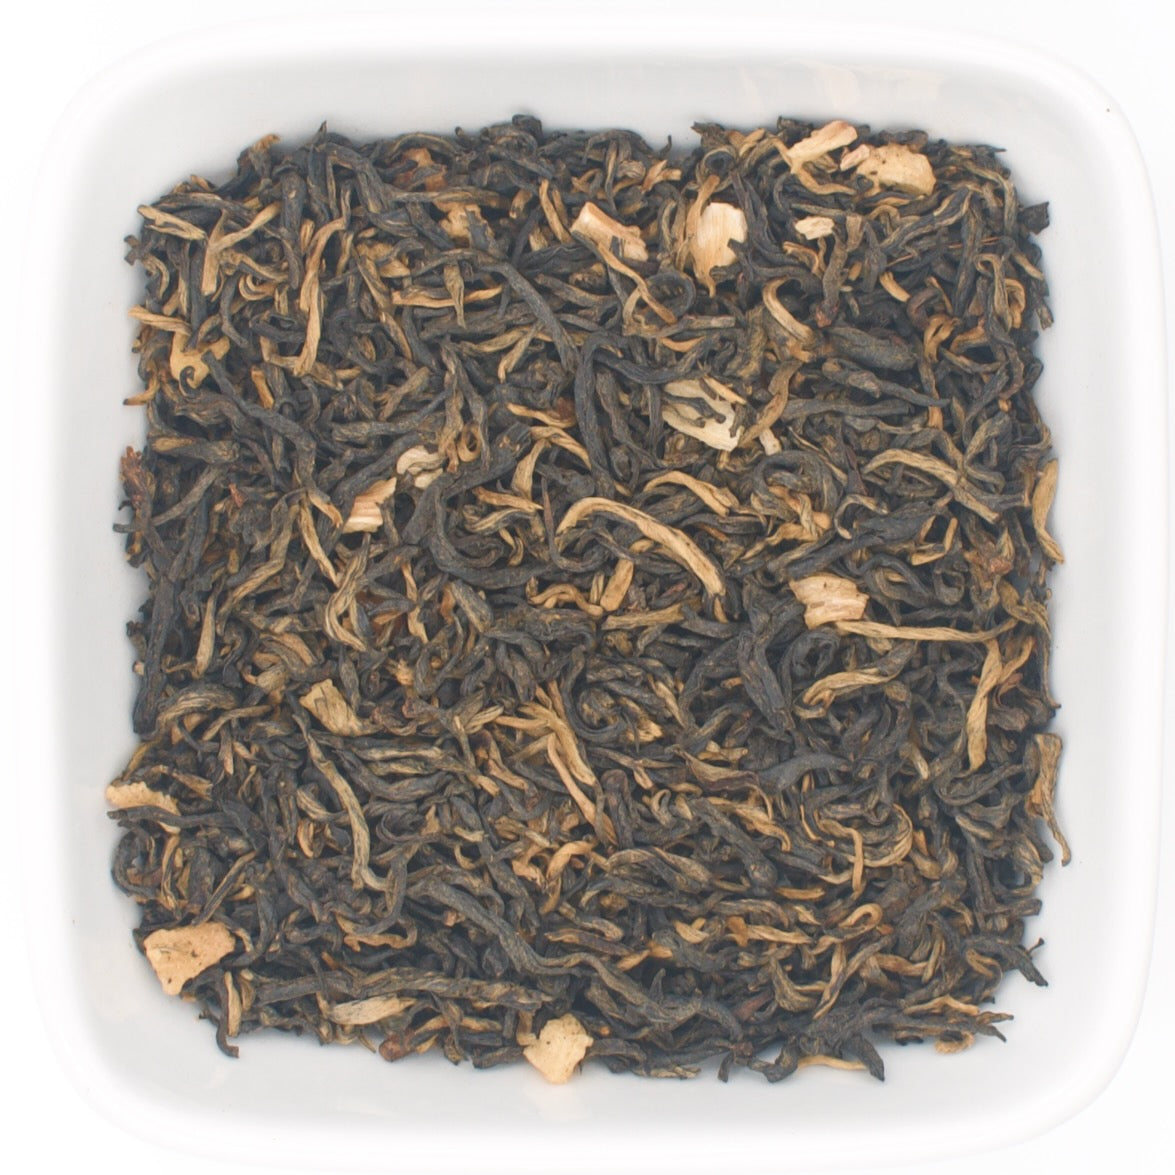 Yingde Lychee Black Tea